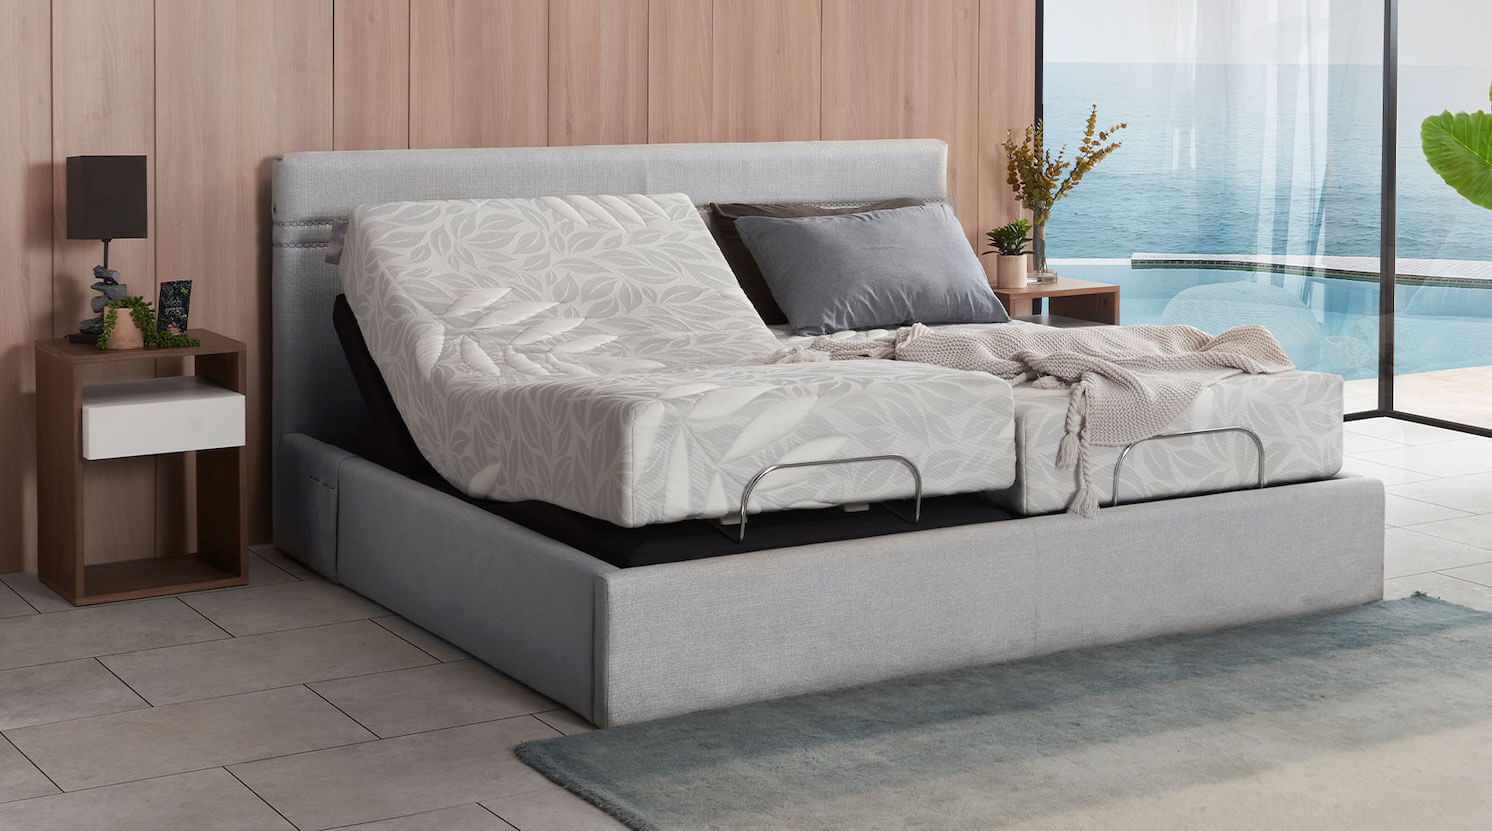 Top 2 Best Adjustable Beds For Seniors Australia In